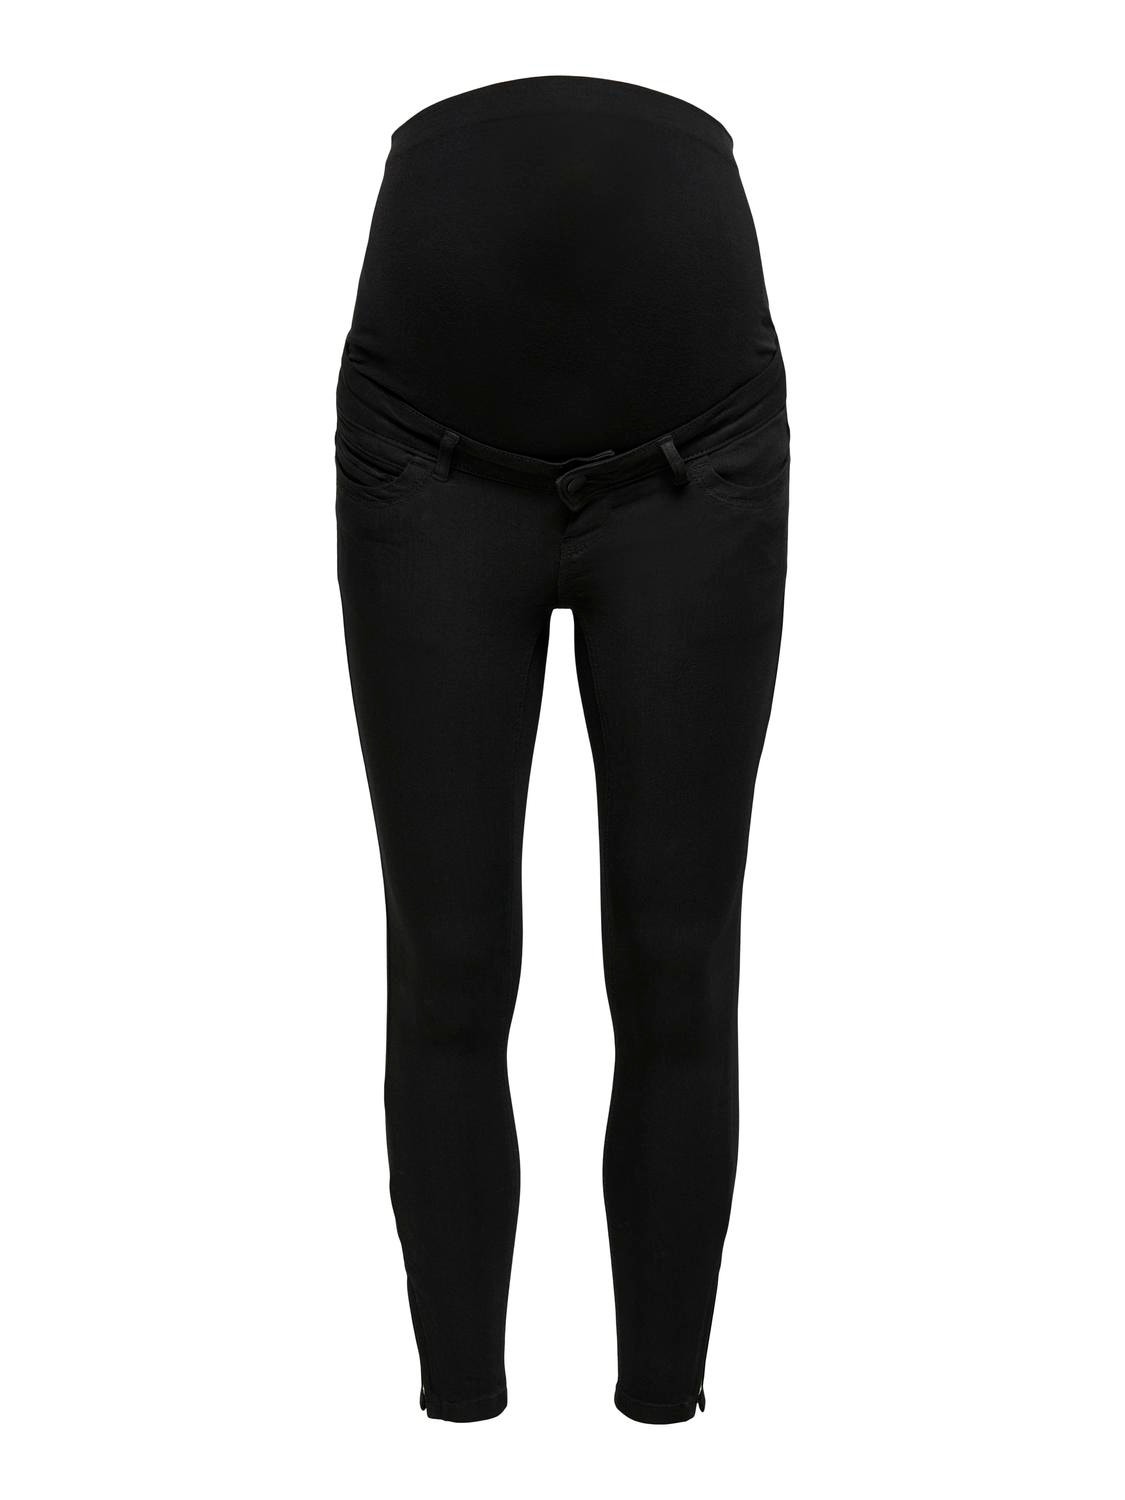 ONLY Skinny Fit Regular waist Zip detail at leg opening Jeans -Black - 15243185